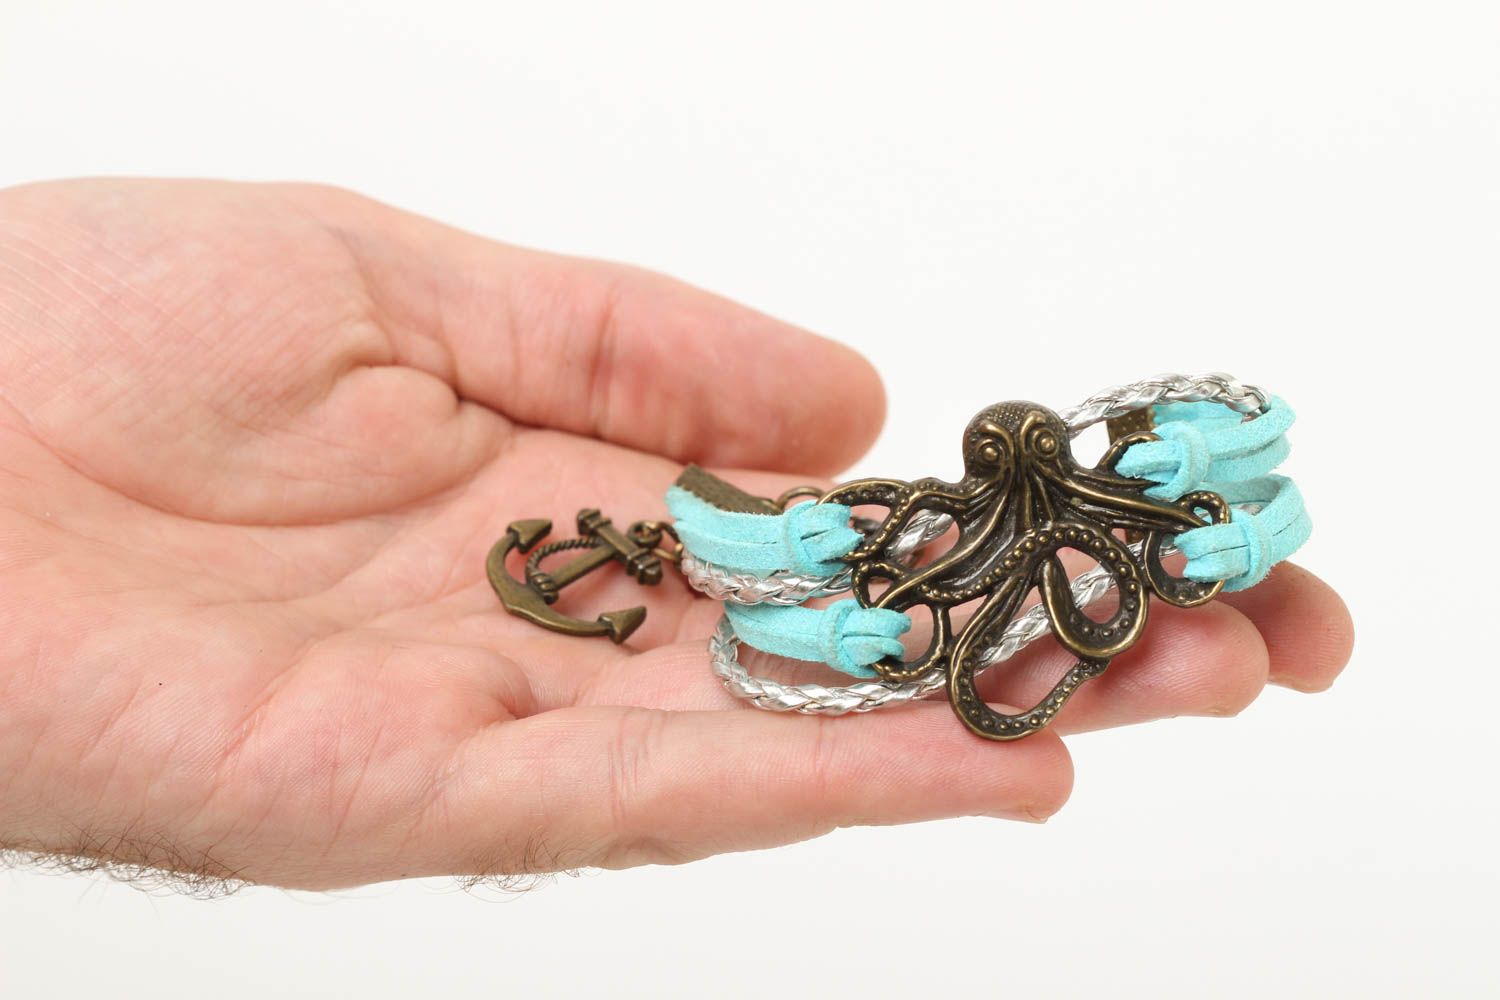 Unusual handmade leather bracelet designs suede wrist bracelet gifts for her photo 5